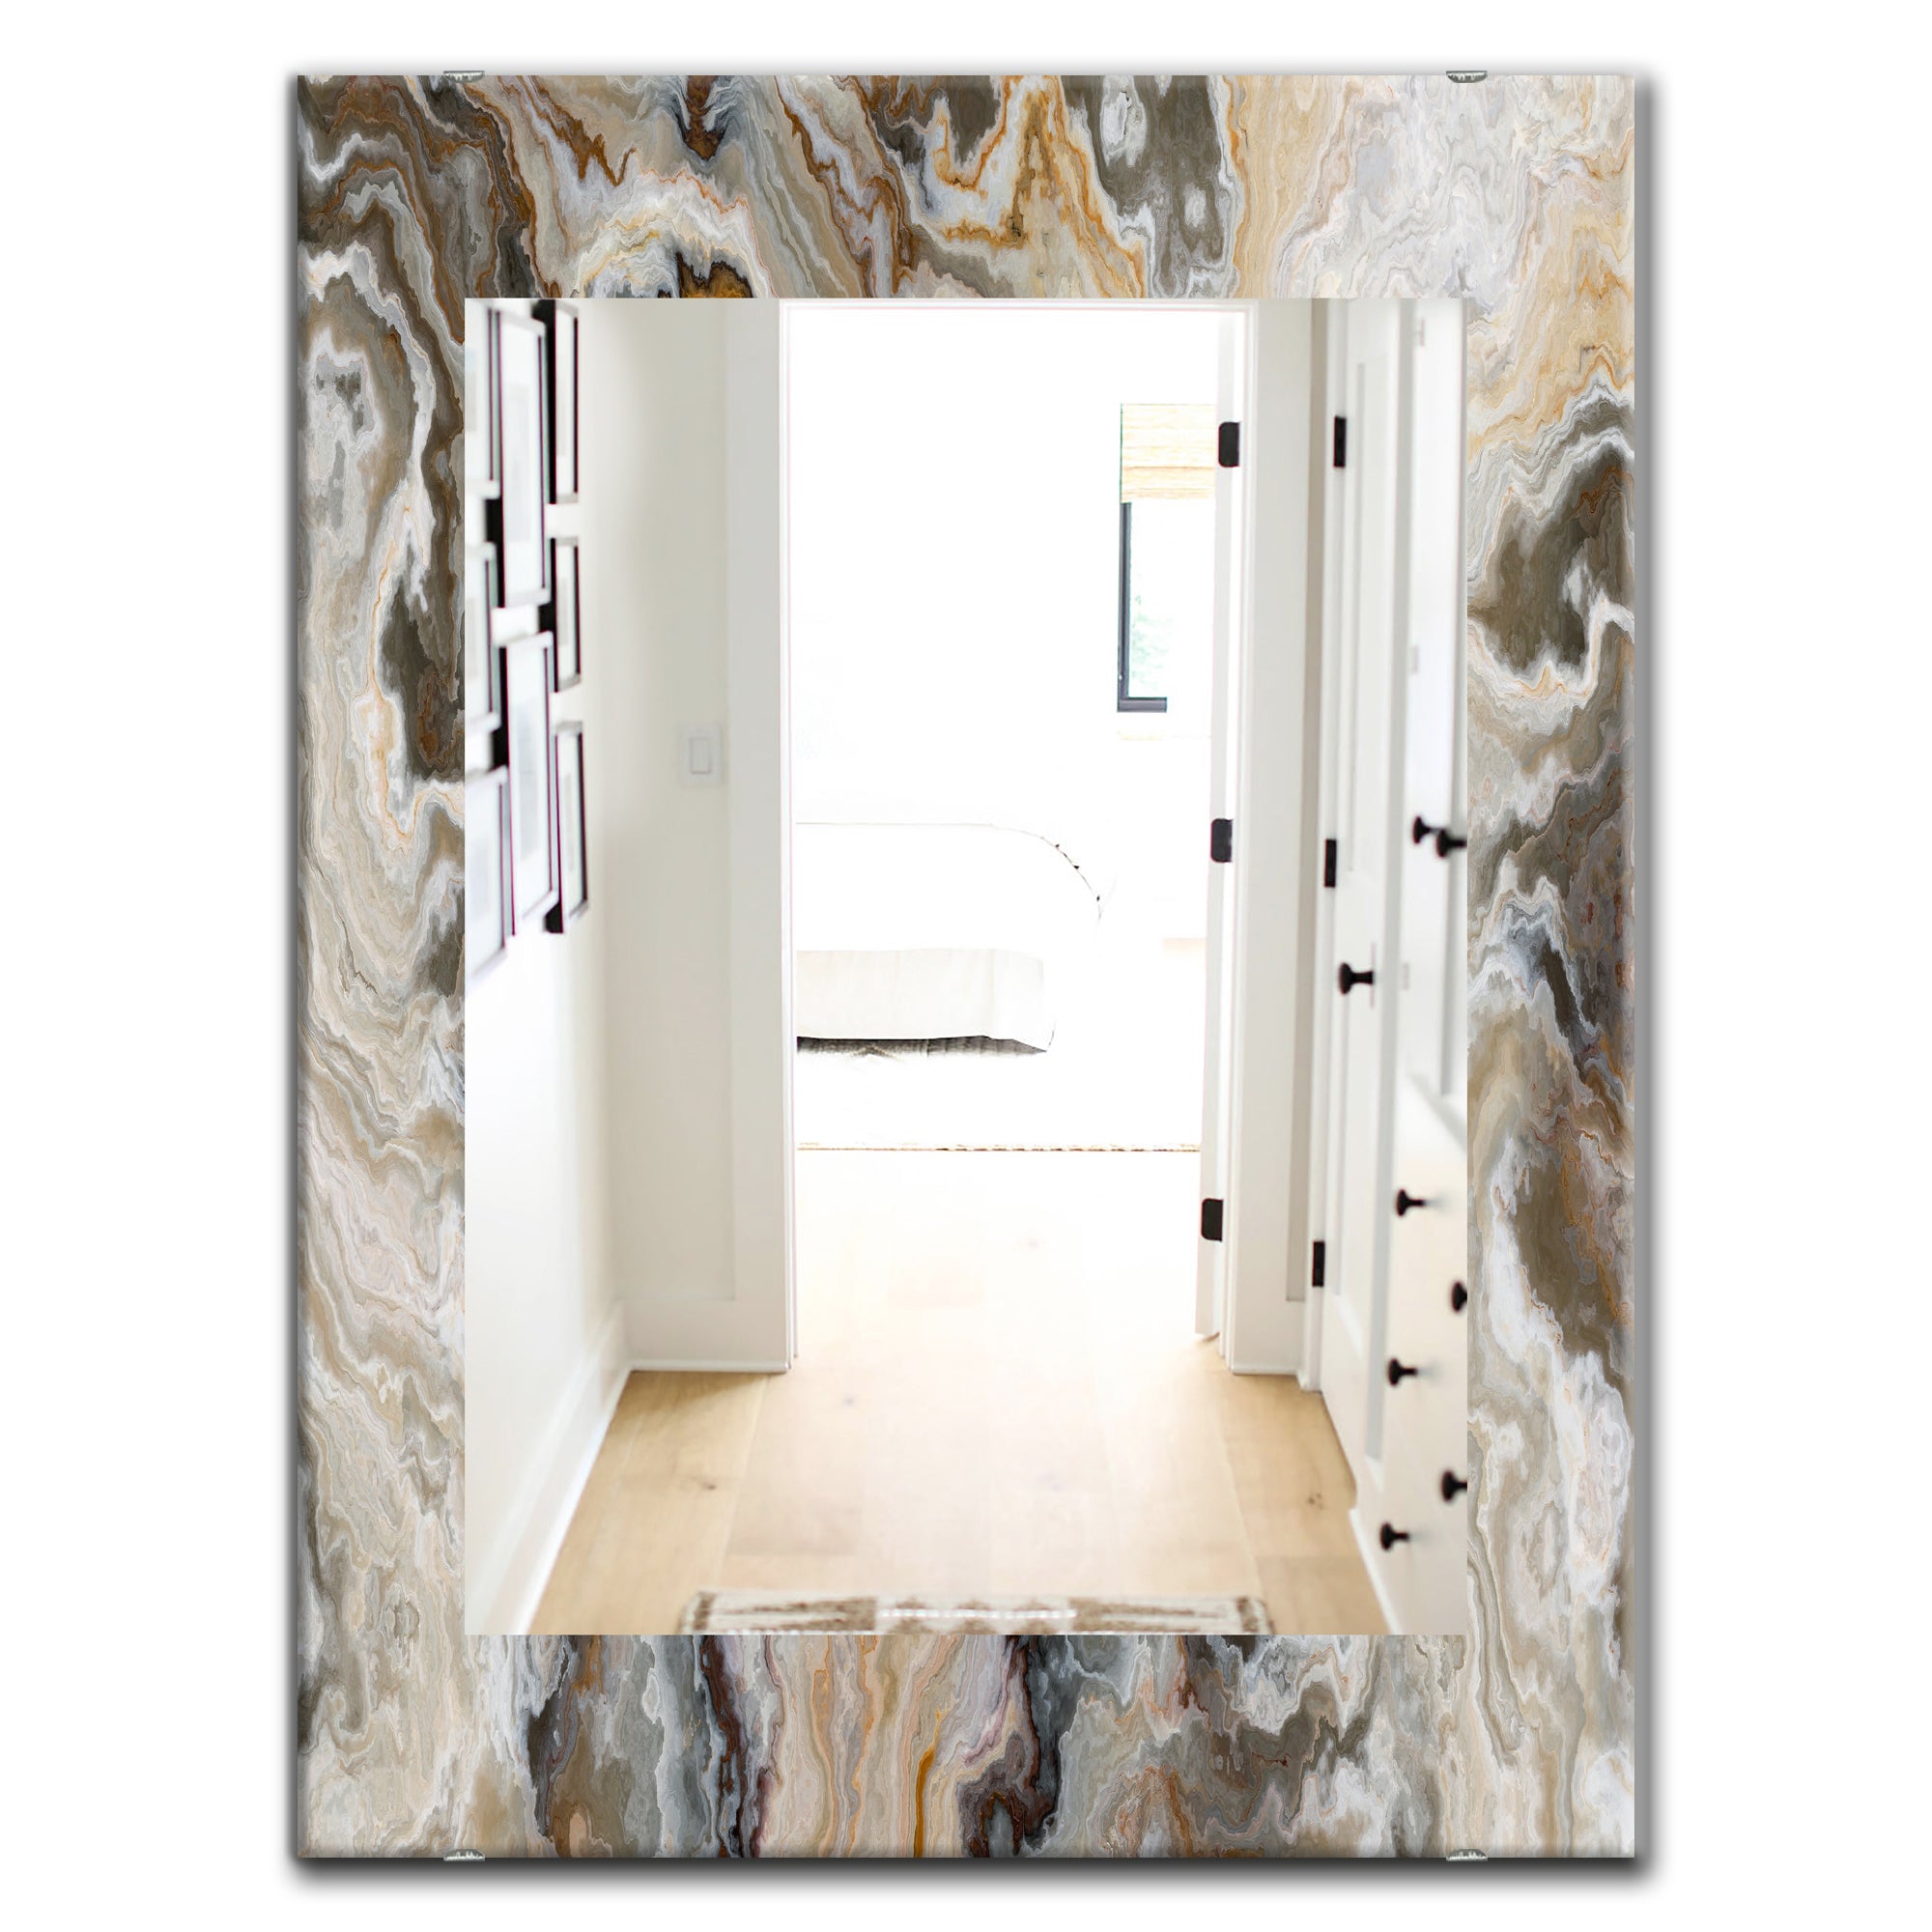 Designart 'Onyx Detail Composition' Mid-Century Mirror - Oval or Round Wall Mirror